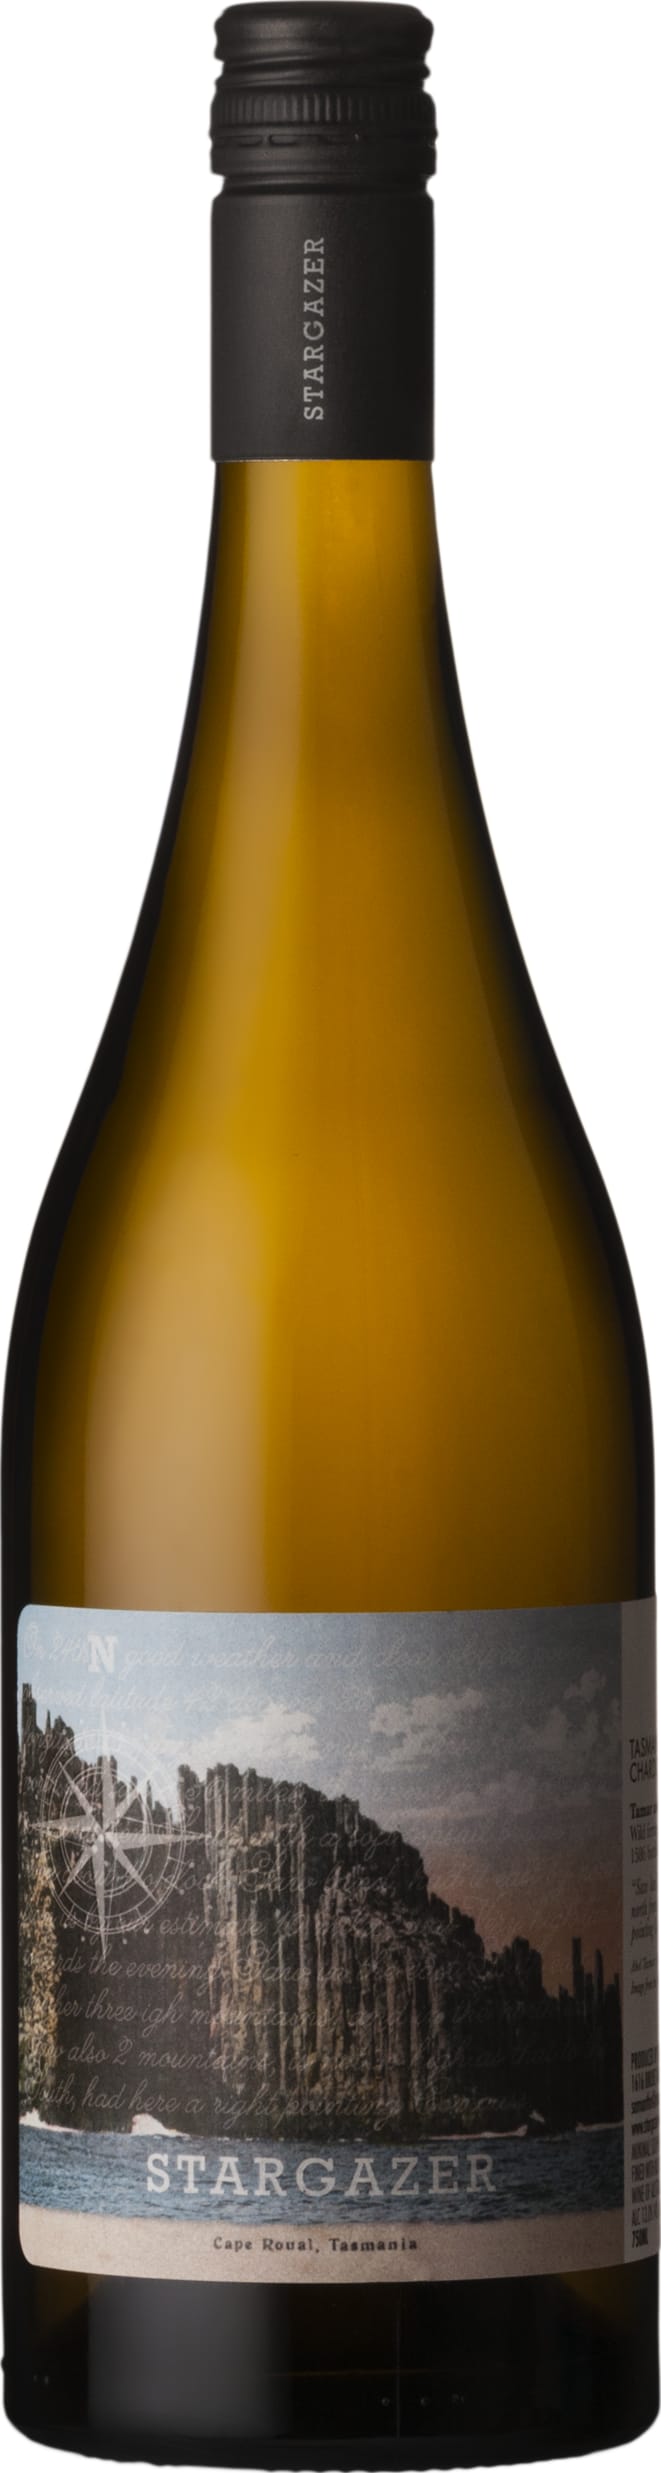 Stargazer Chardonnay 2022 75cl - Buy Stargazer Wines from GREAT WINES DIRECT wine shop